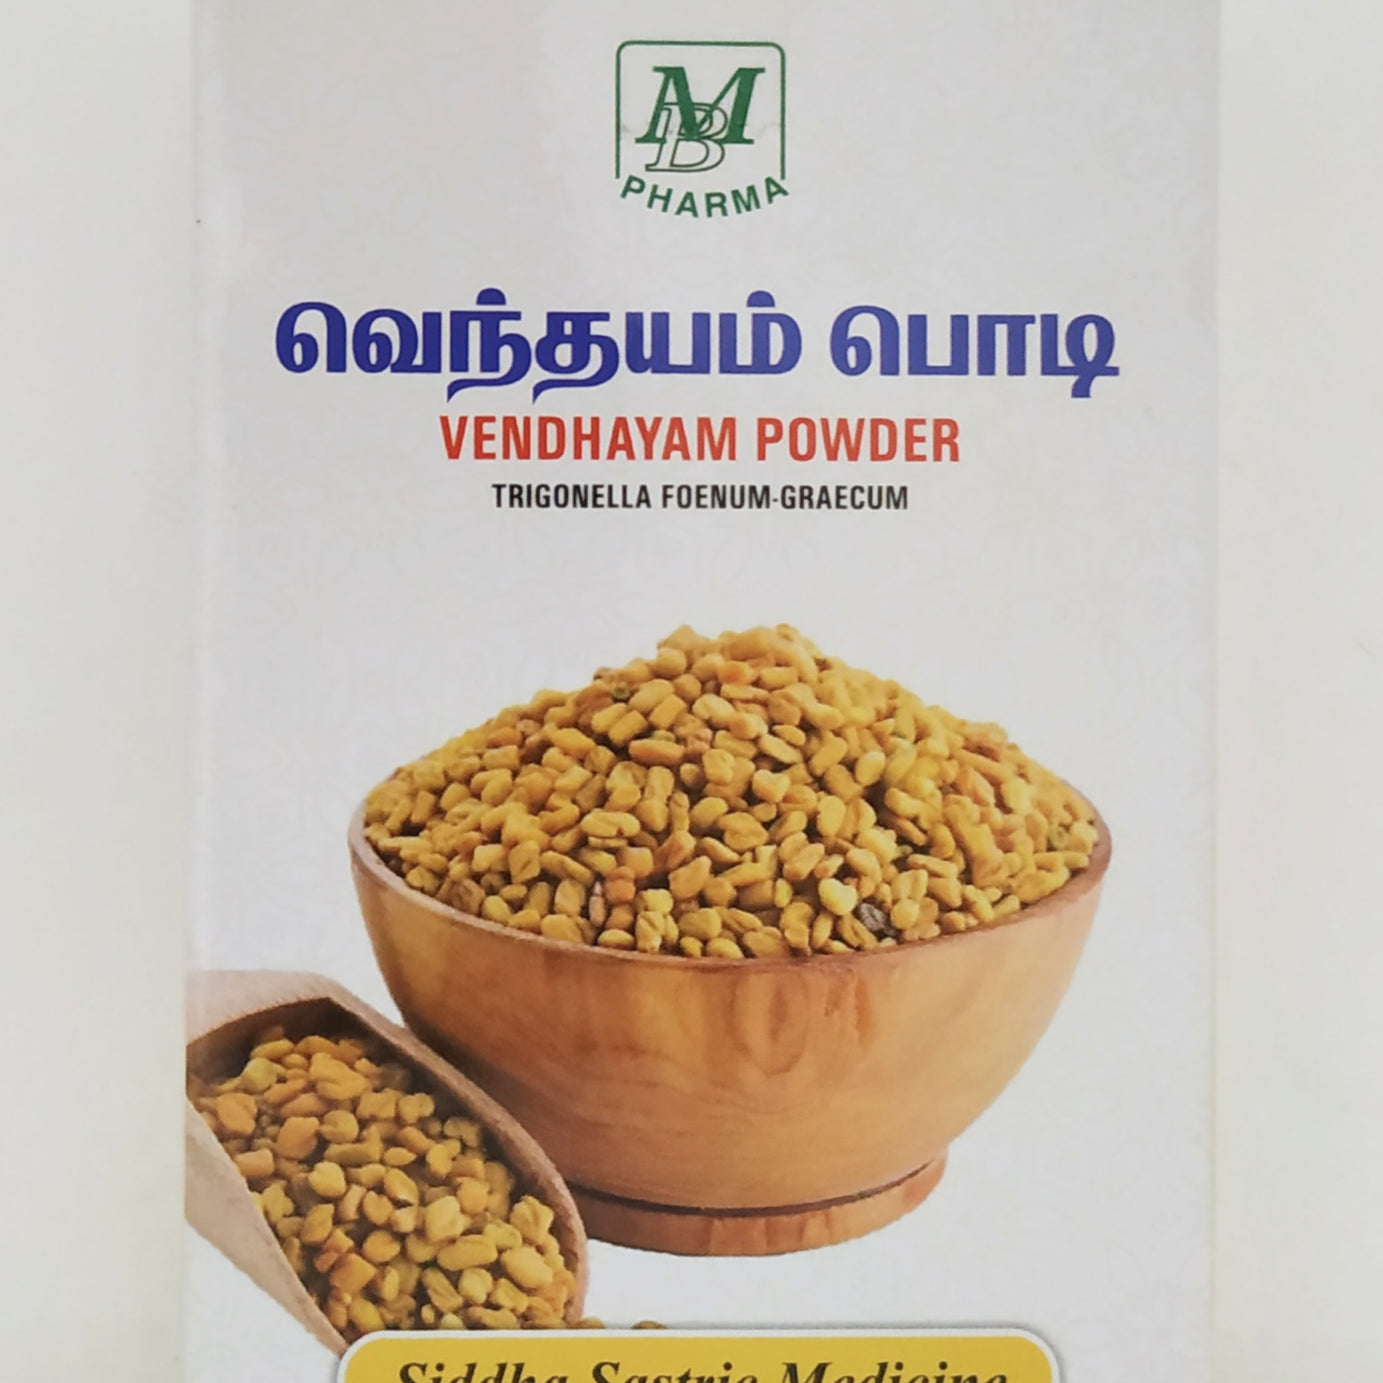 Shop Vendhayam powder 50gm at price 36.00 from MB Pharma Online - Ayush Care